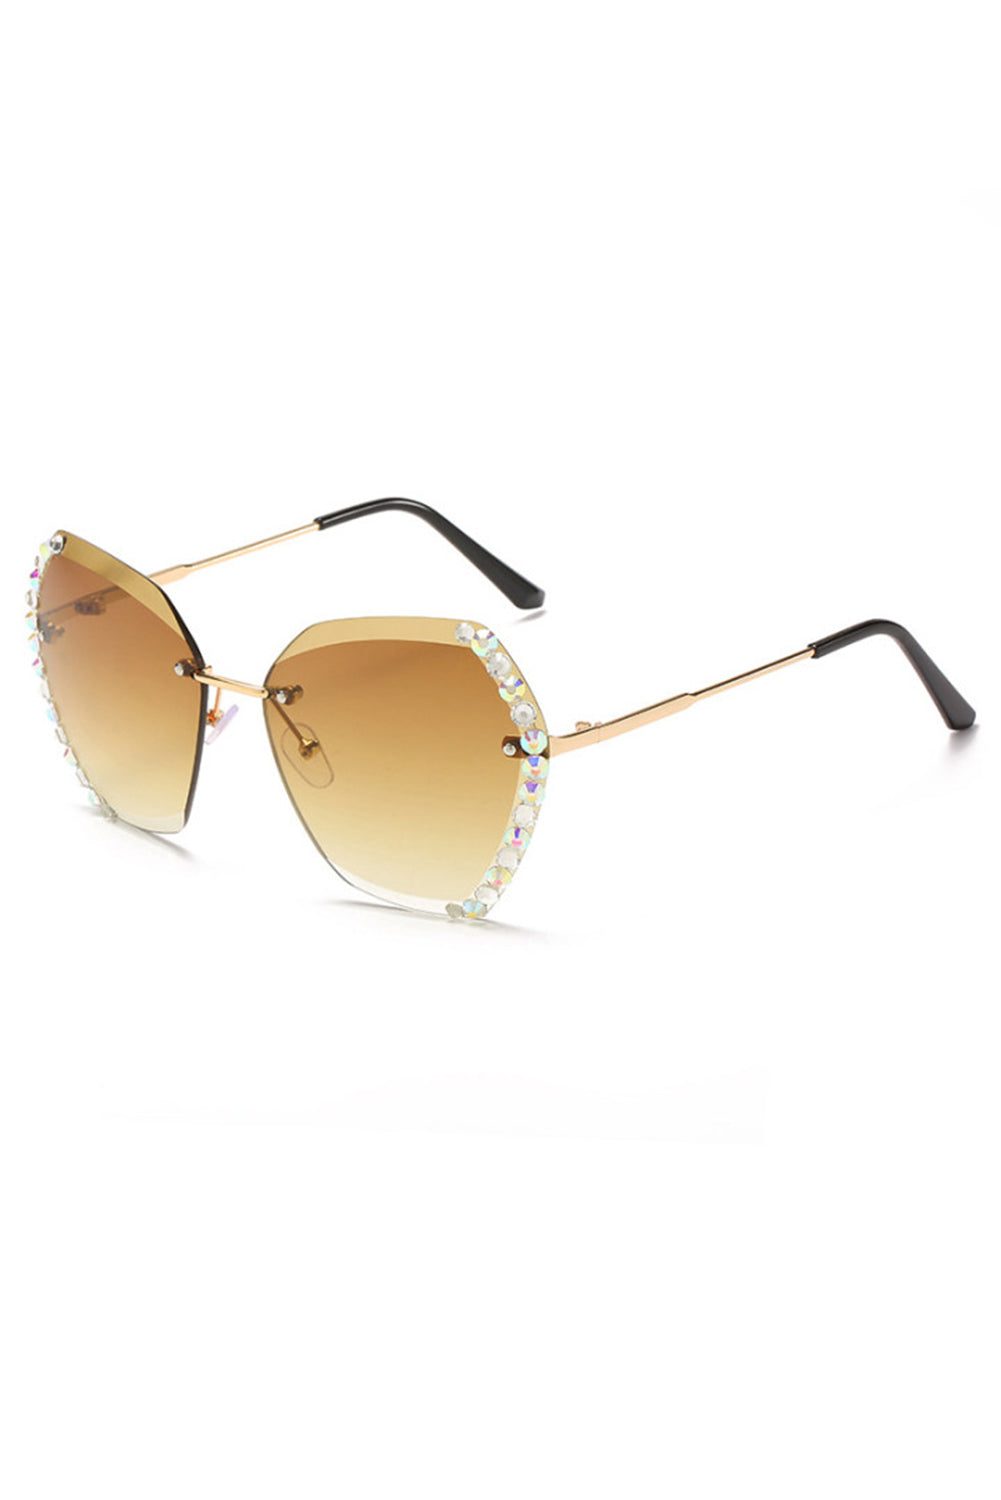 TRAVELING GYPSY-Brown Rhinestone Trim Rimless Sunglasses